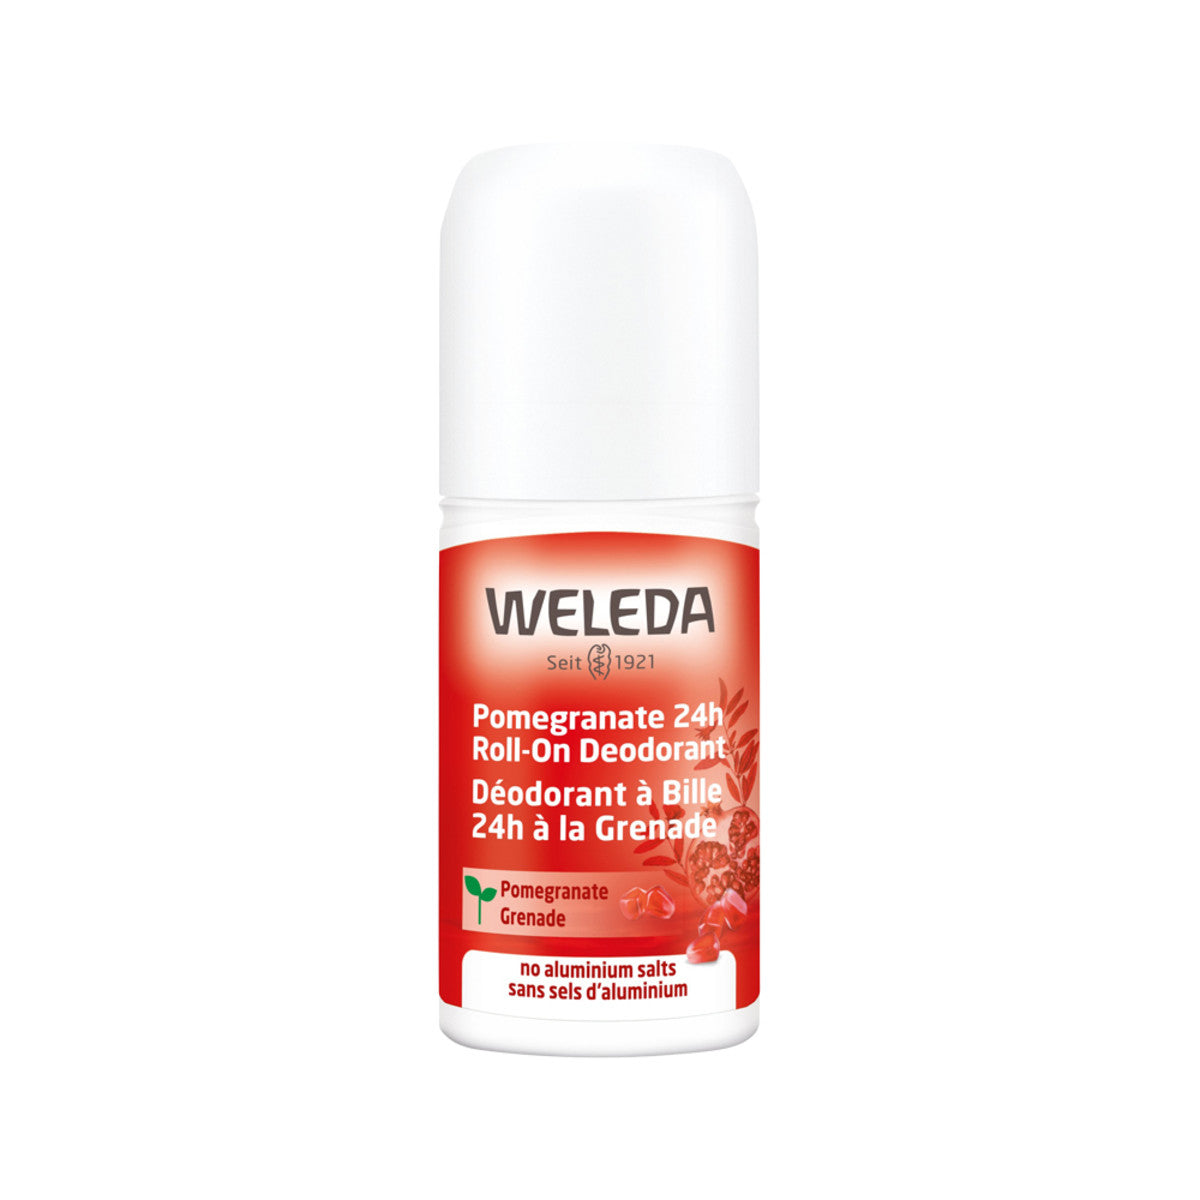 Weleda -  Pomegranate 24hr Roll-on Deodorant